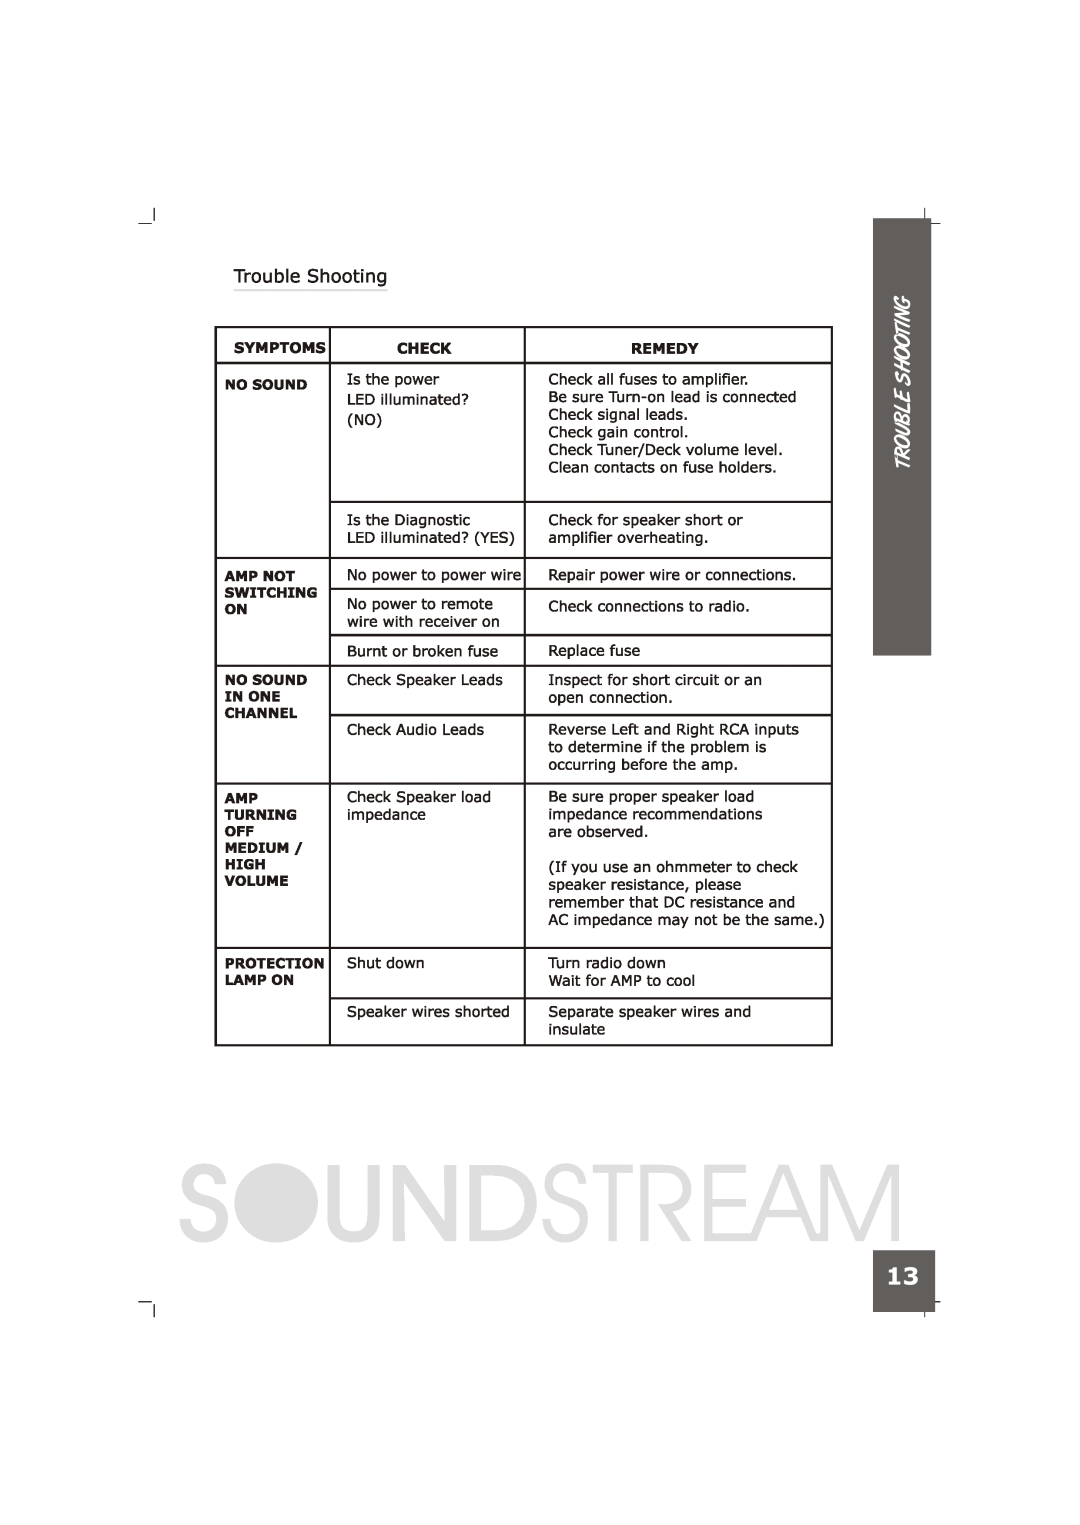 Soundstream Technologies TRX15000, TRX7000, TRX10000, TRX20000 manual 